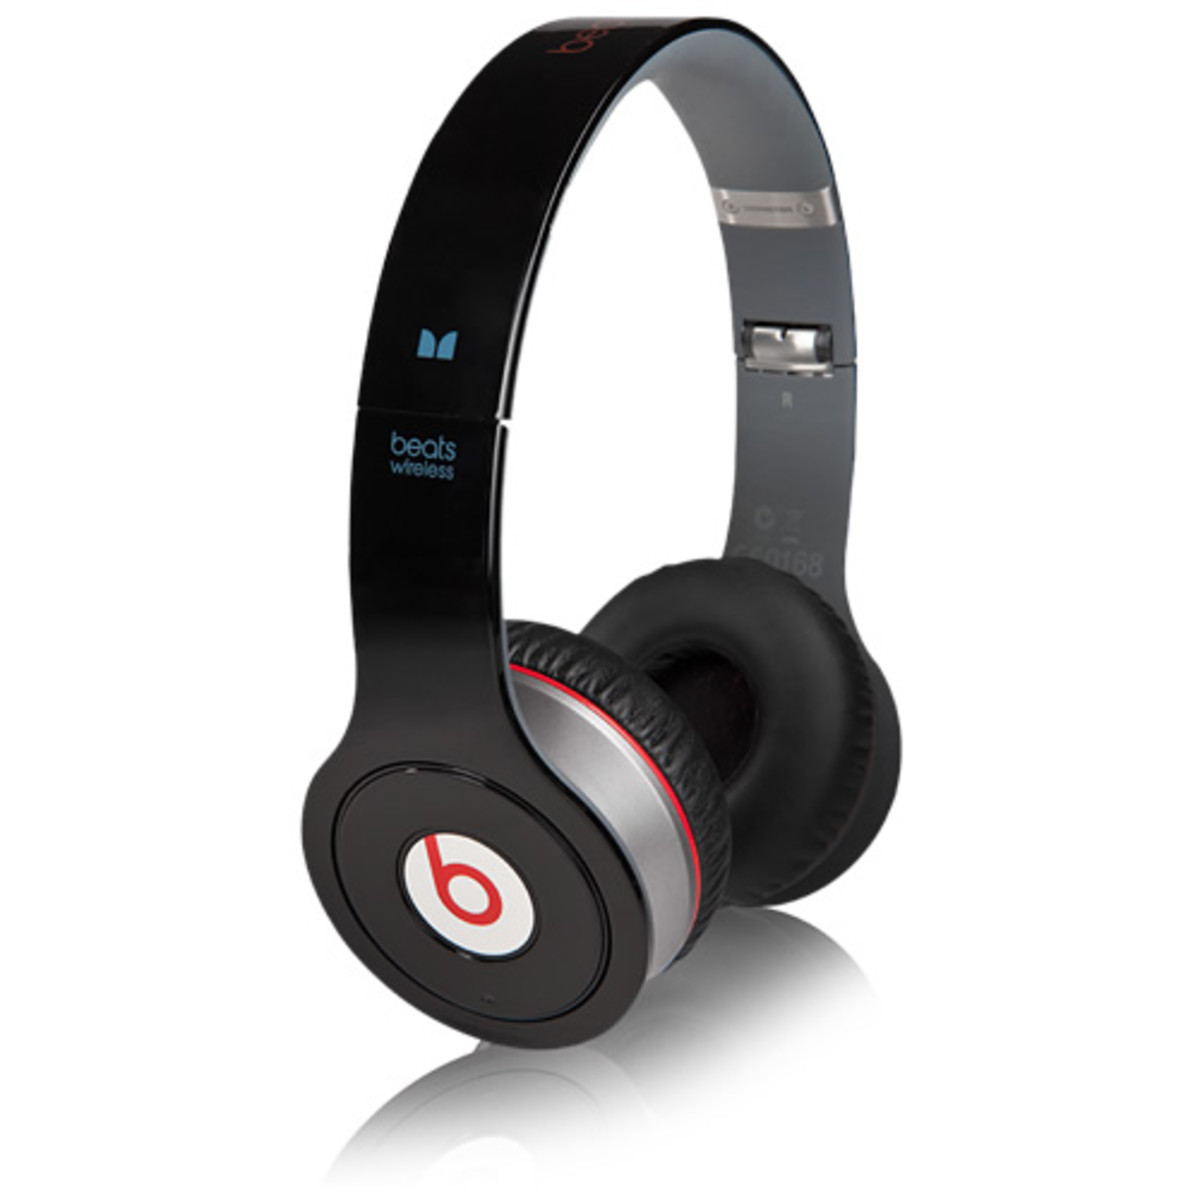 Beats Wireless \u0026 Mixr Headphones - Acquire